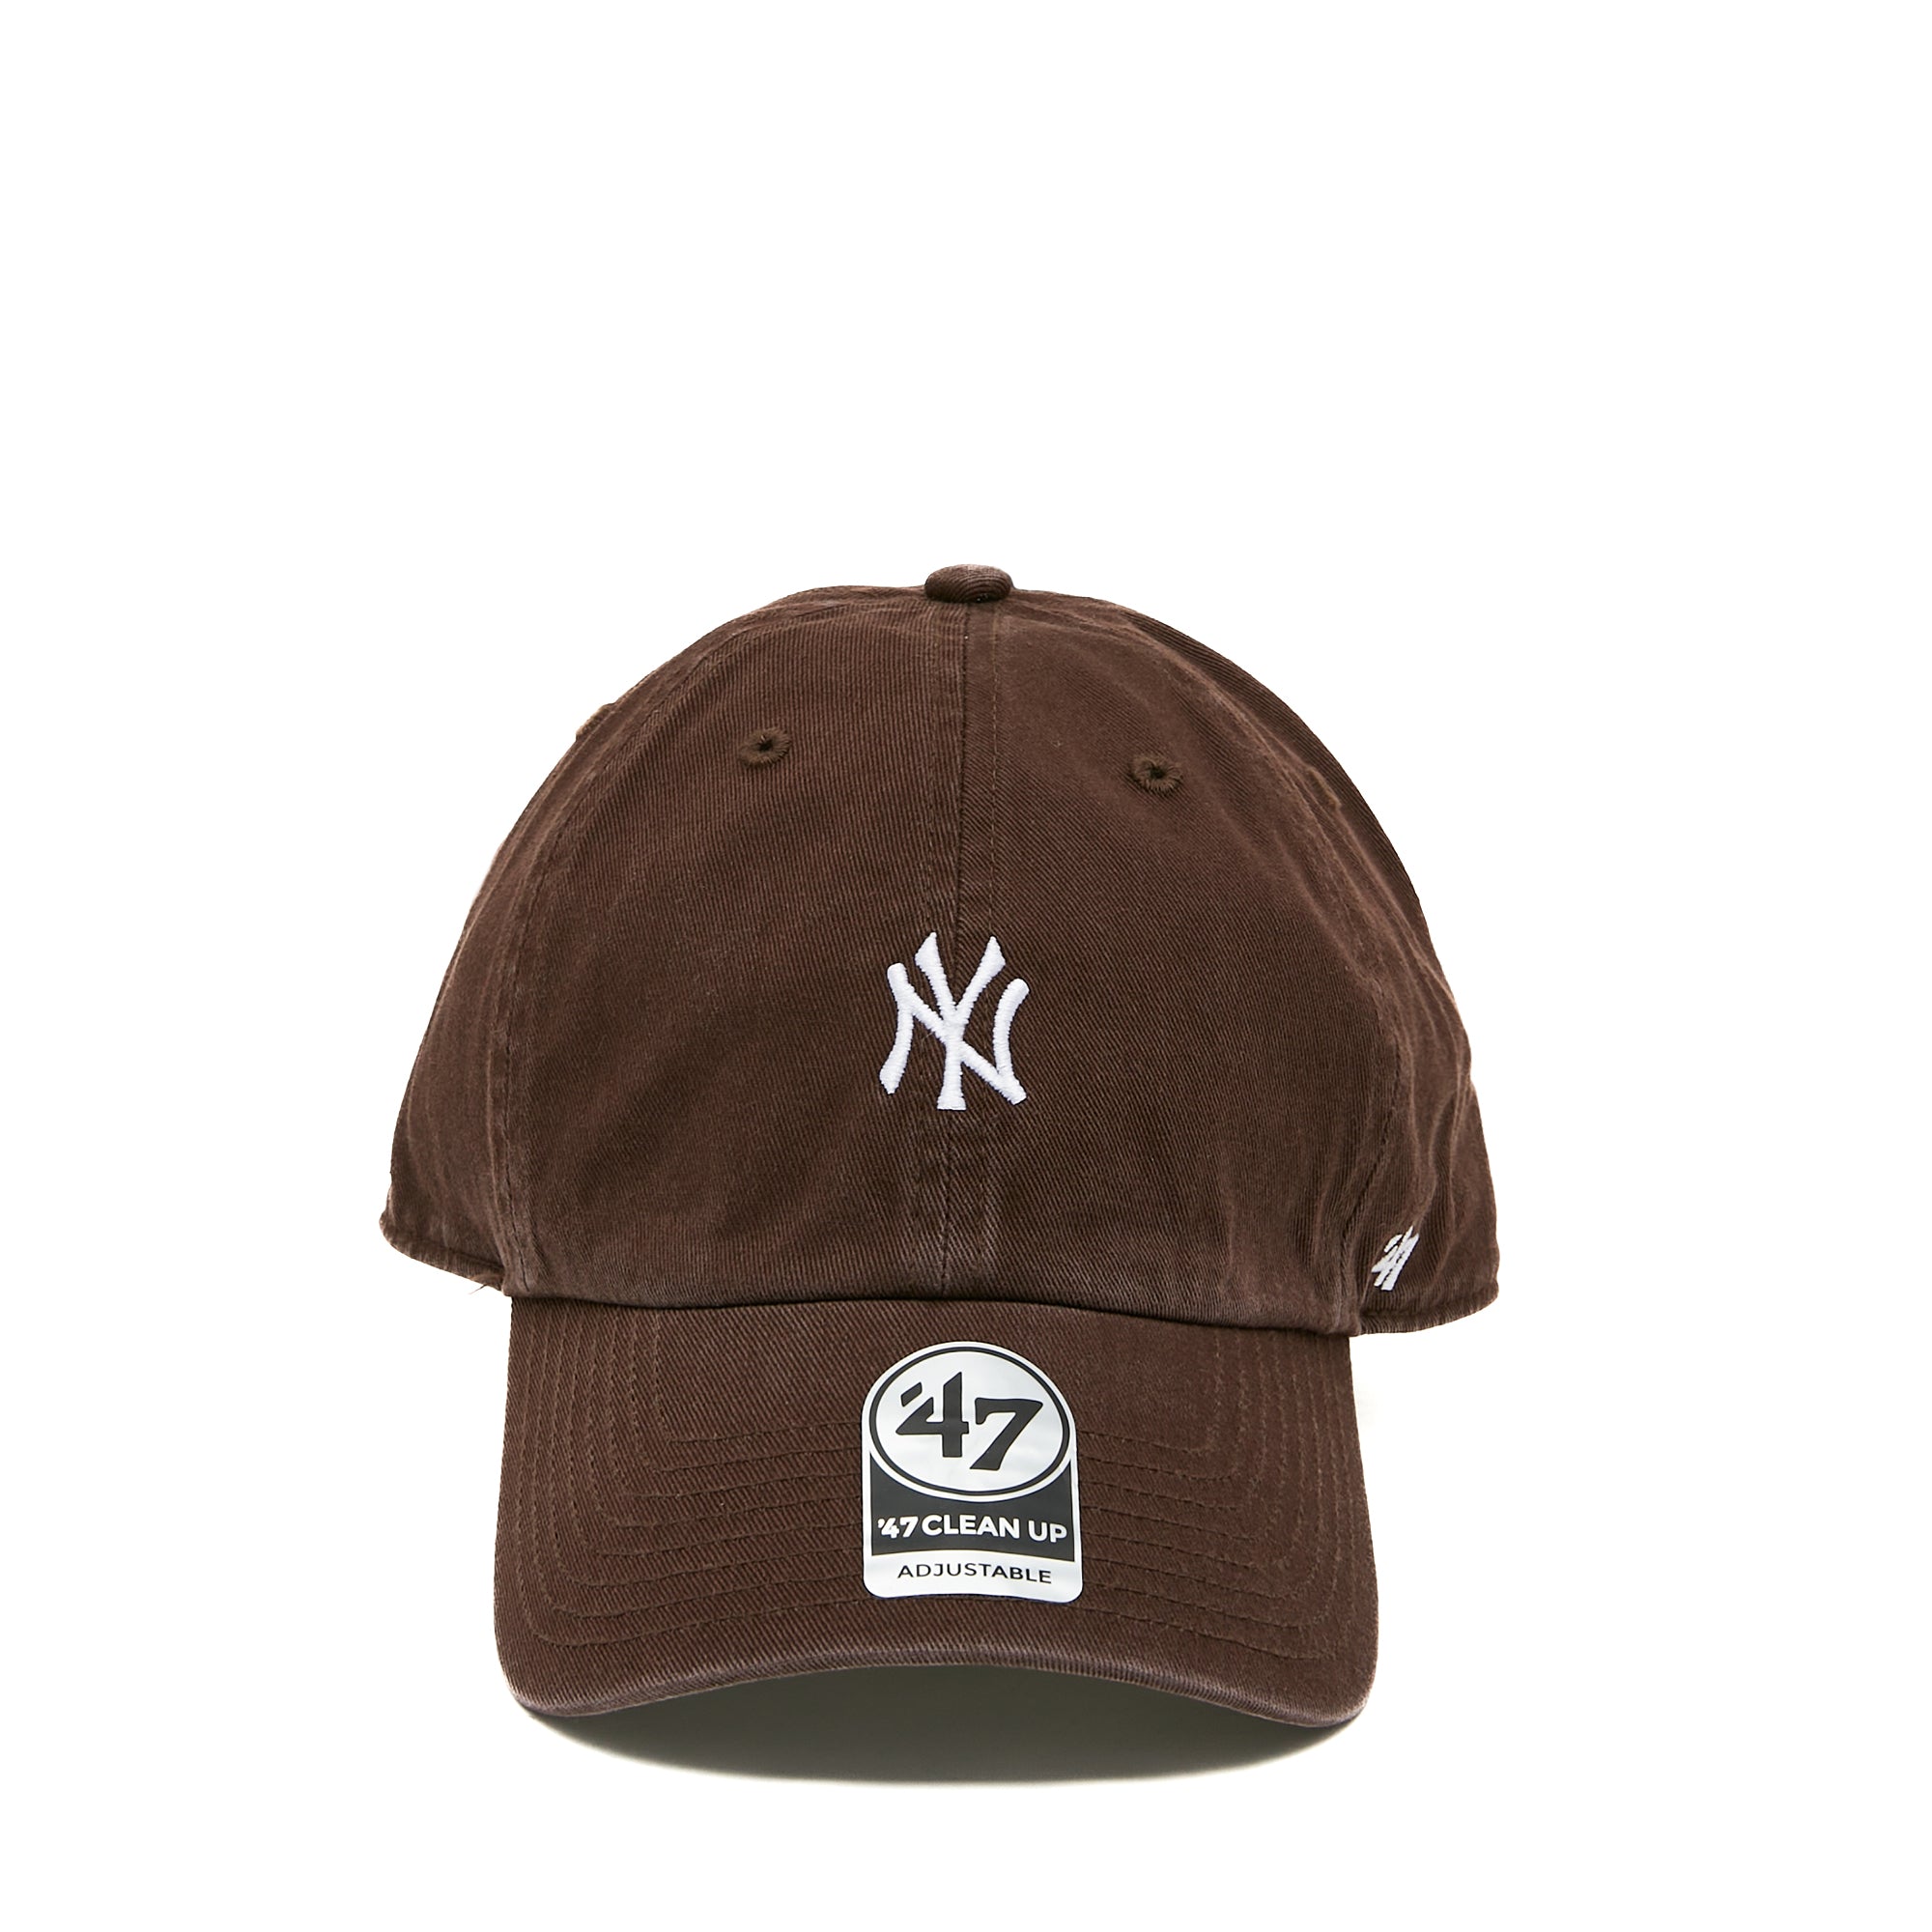 MLB New York Yankees Base Runner Cap Brown One Size